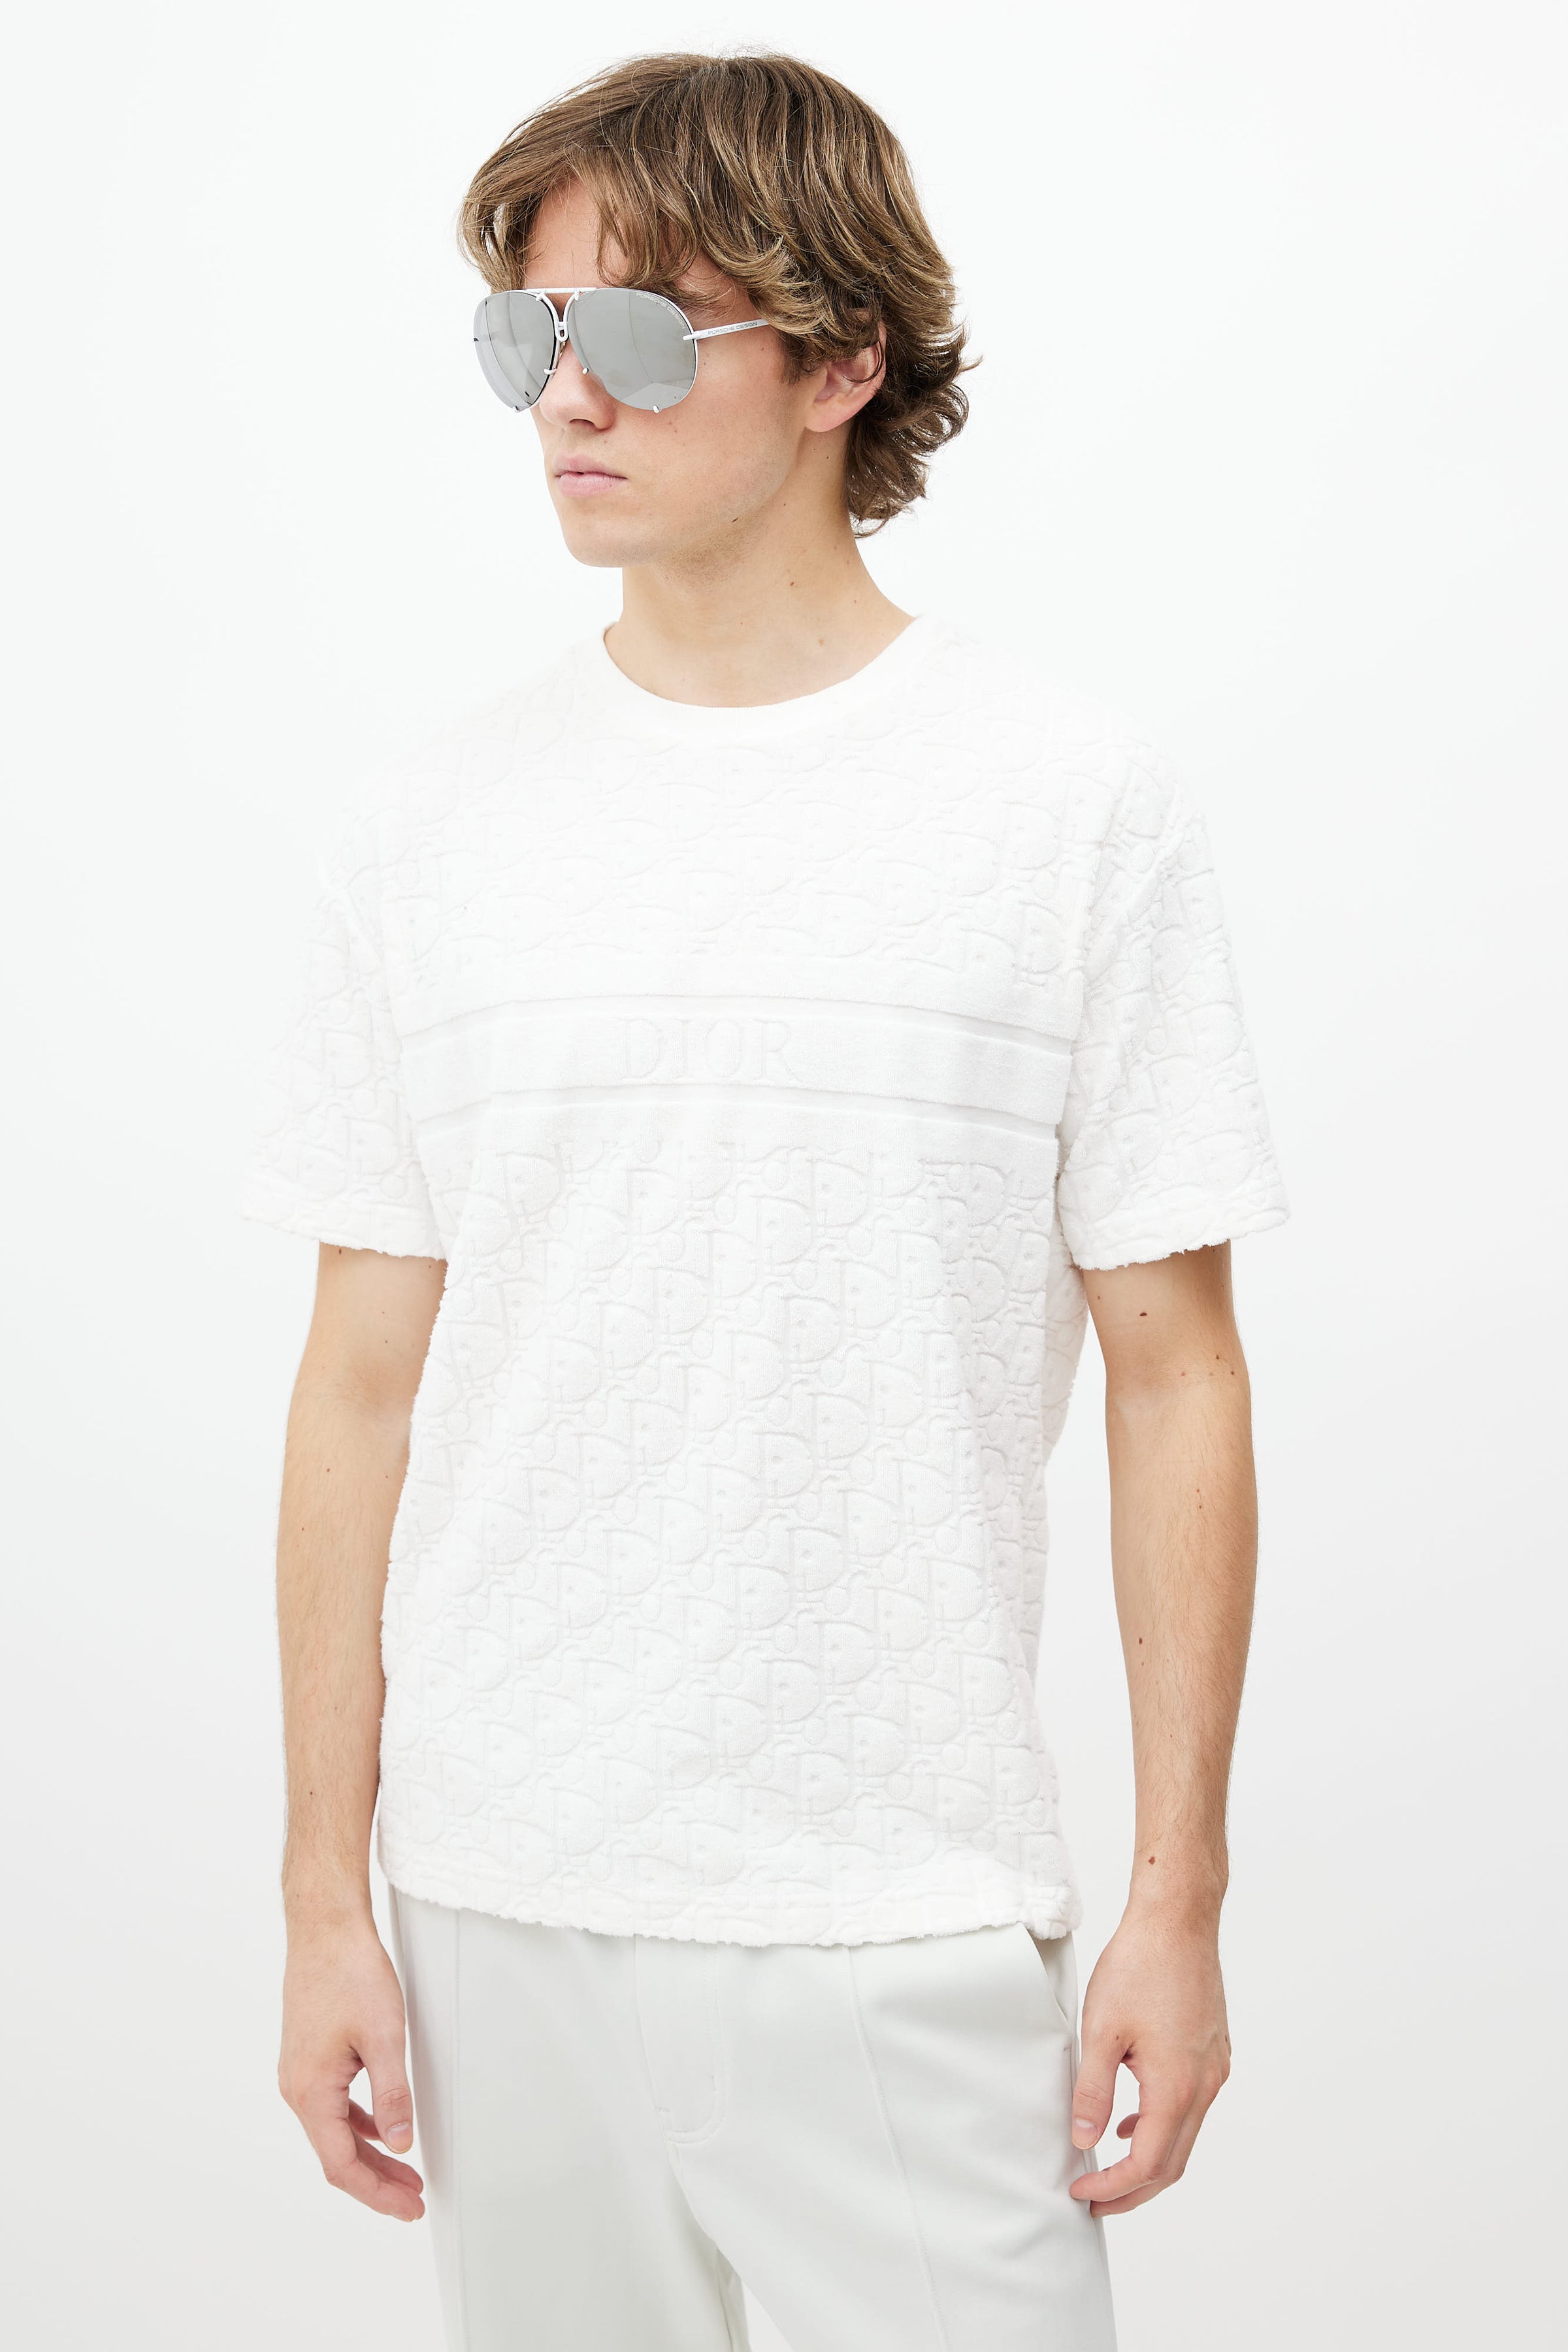 Dior Men's Oblique Polo Shirt